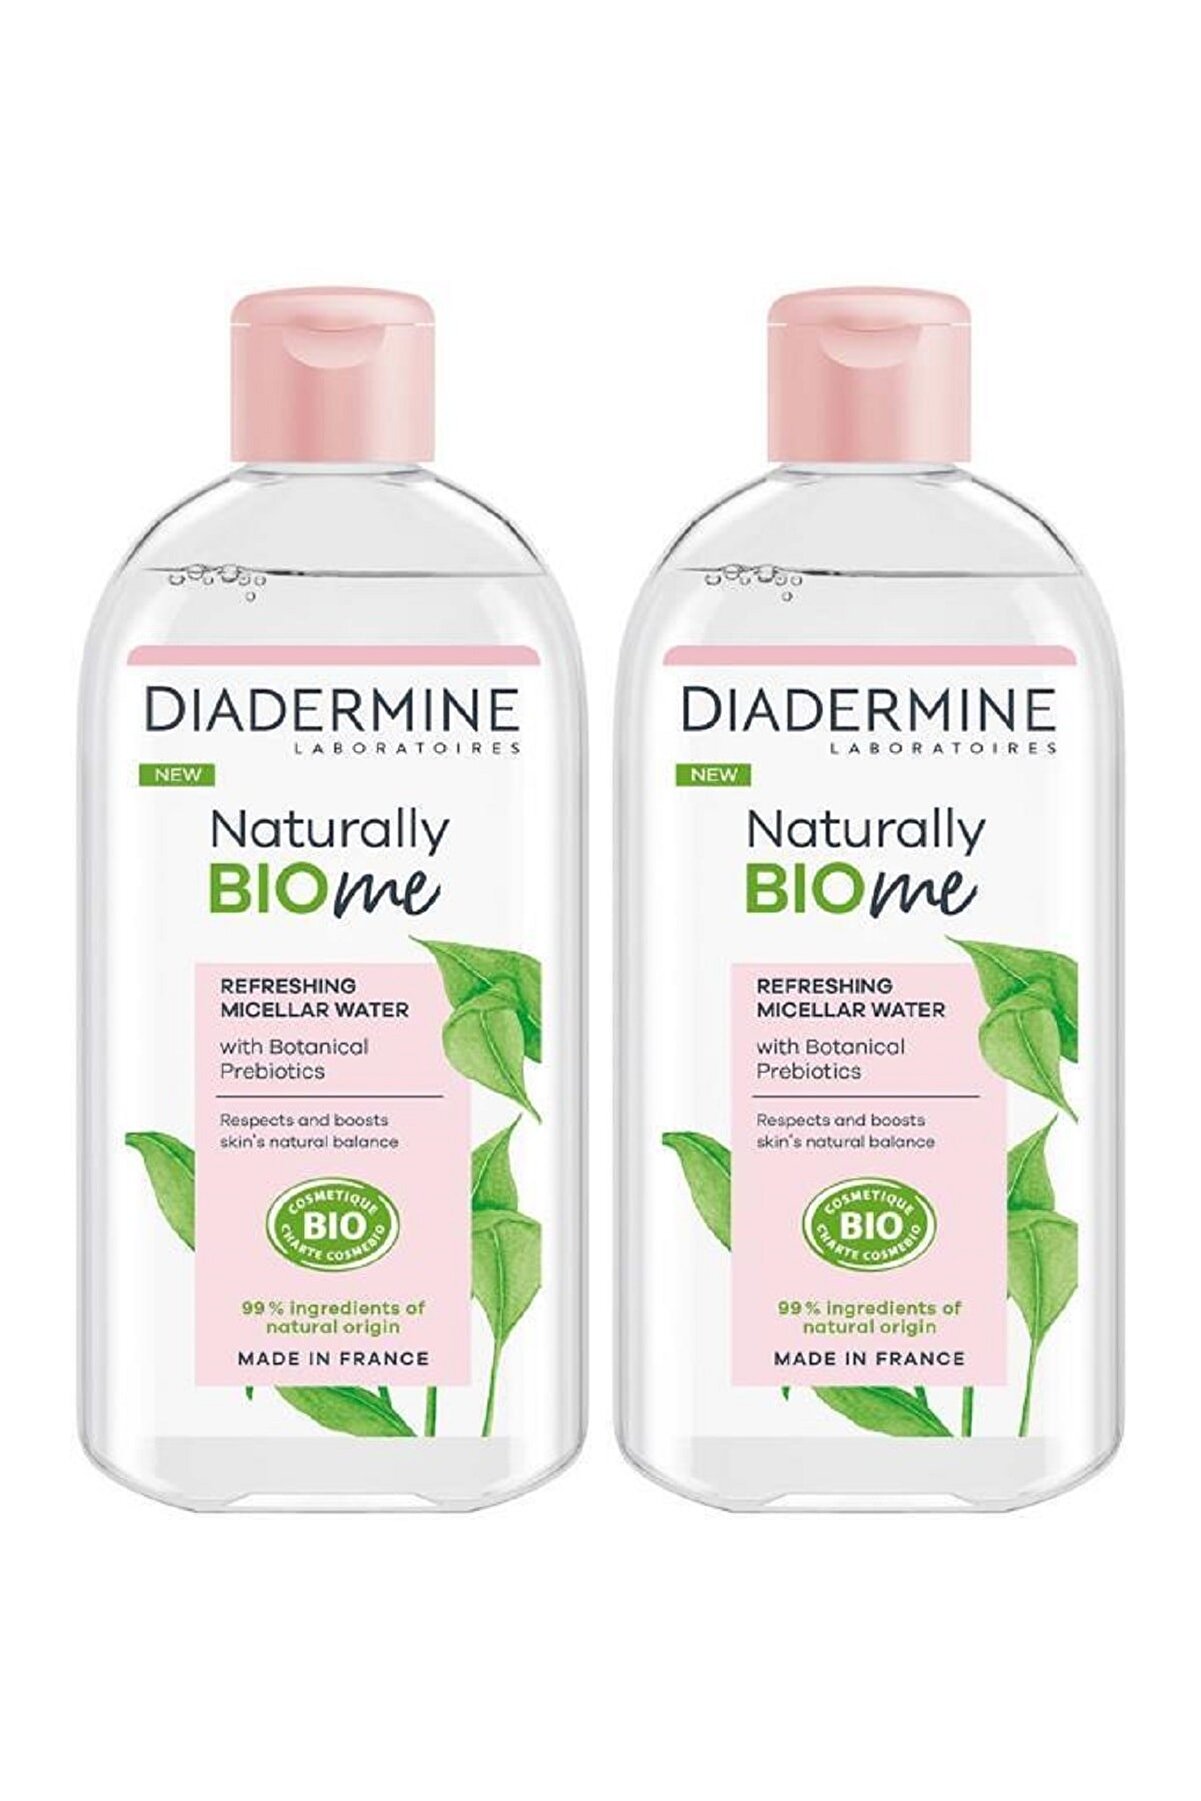 Diadermine Naturally Bio Me Canlandırıcı Micellar Makyaj Temizleme Suyu X 2 Adet